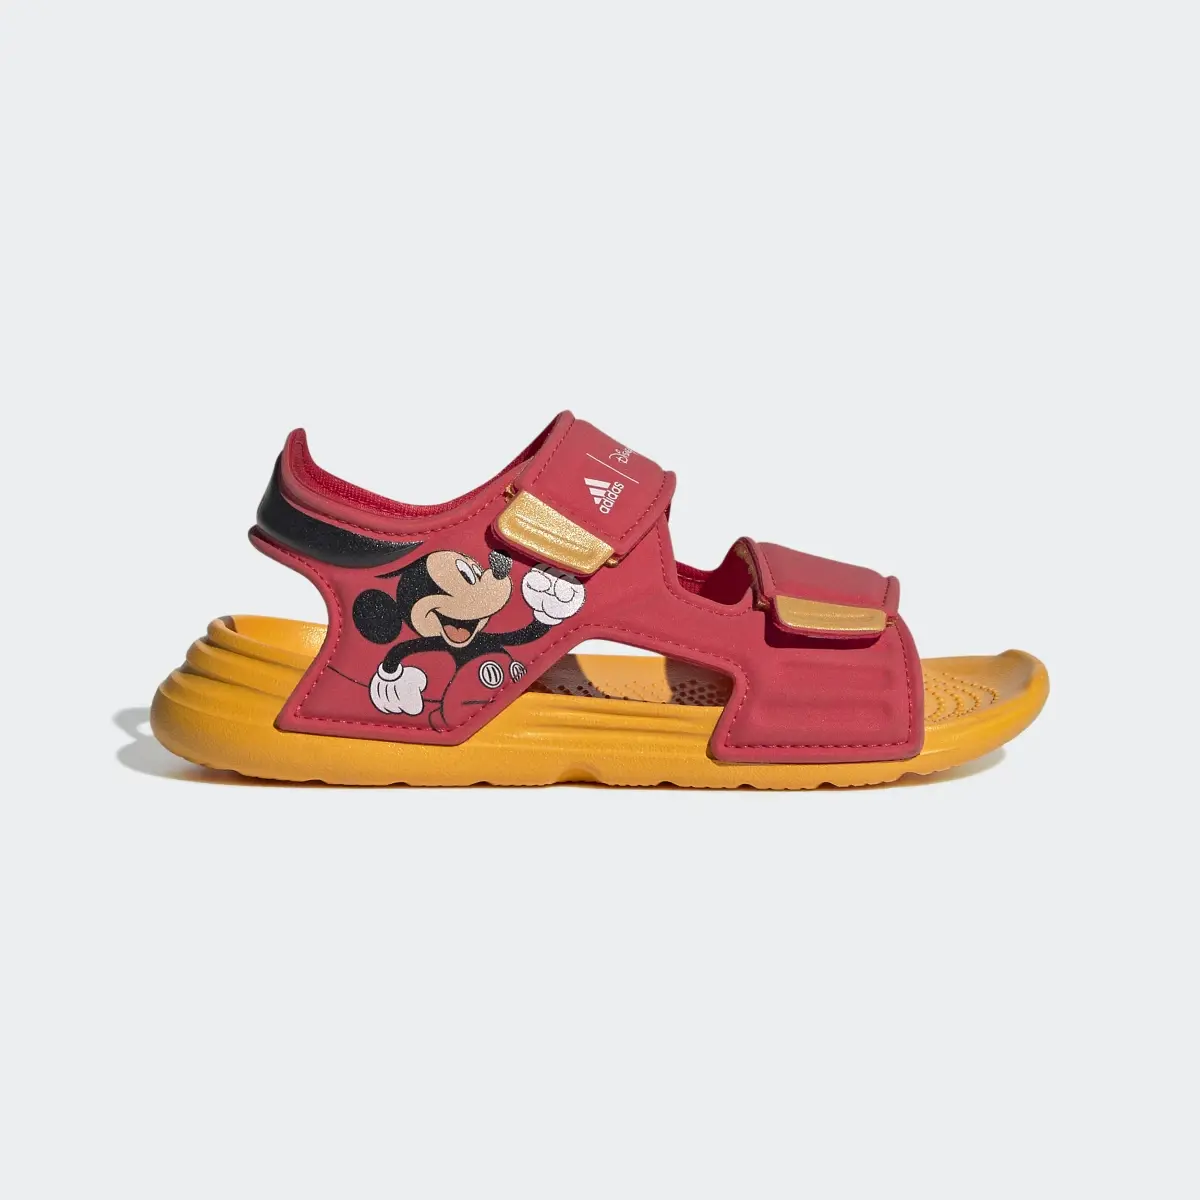 Adidas x Disney Mickey Mouse AltaSwim Sandals. 2